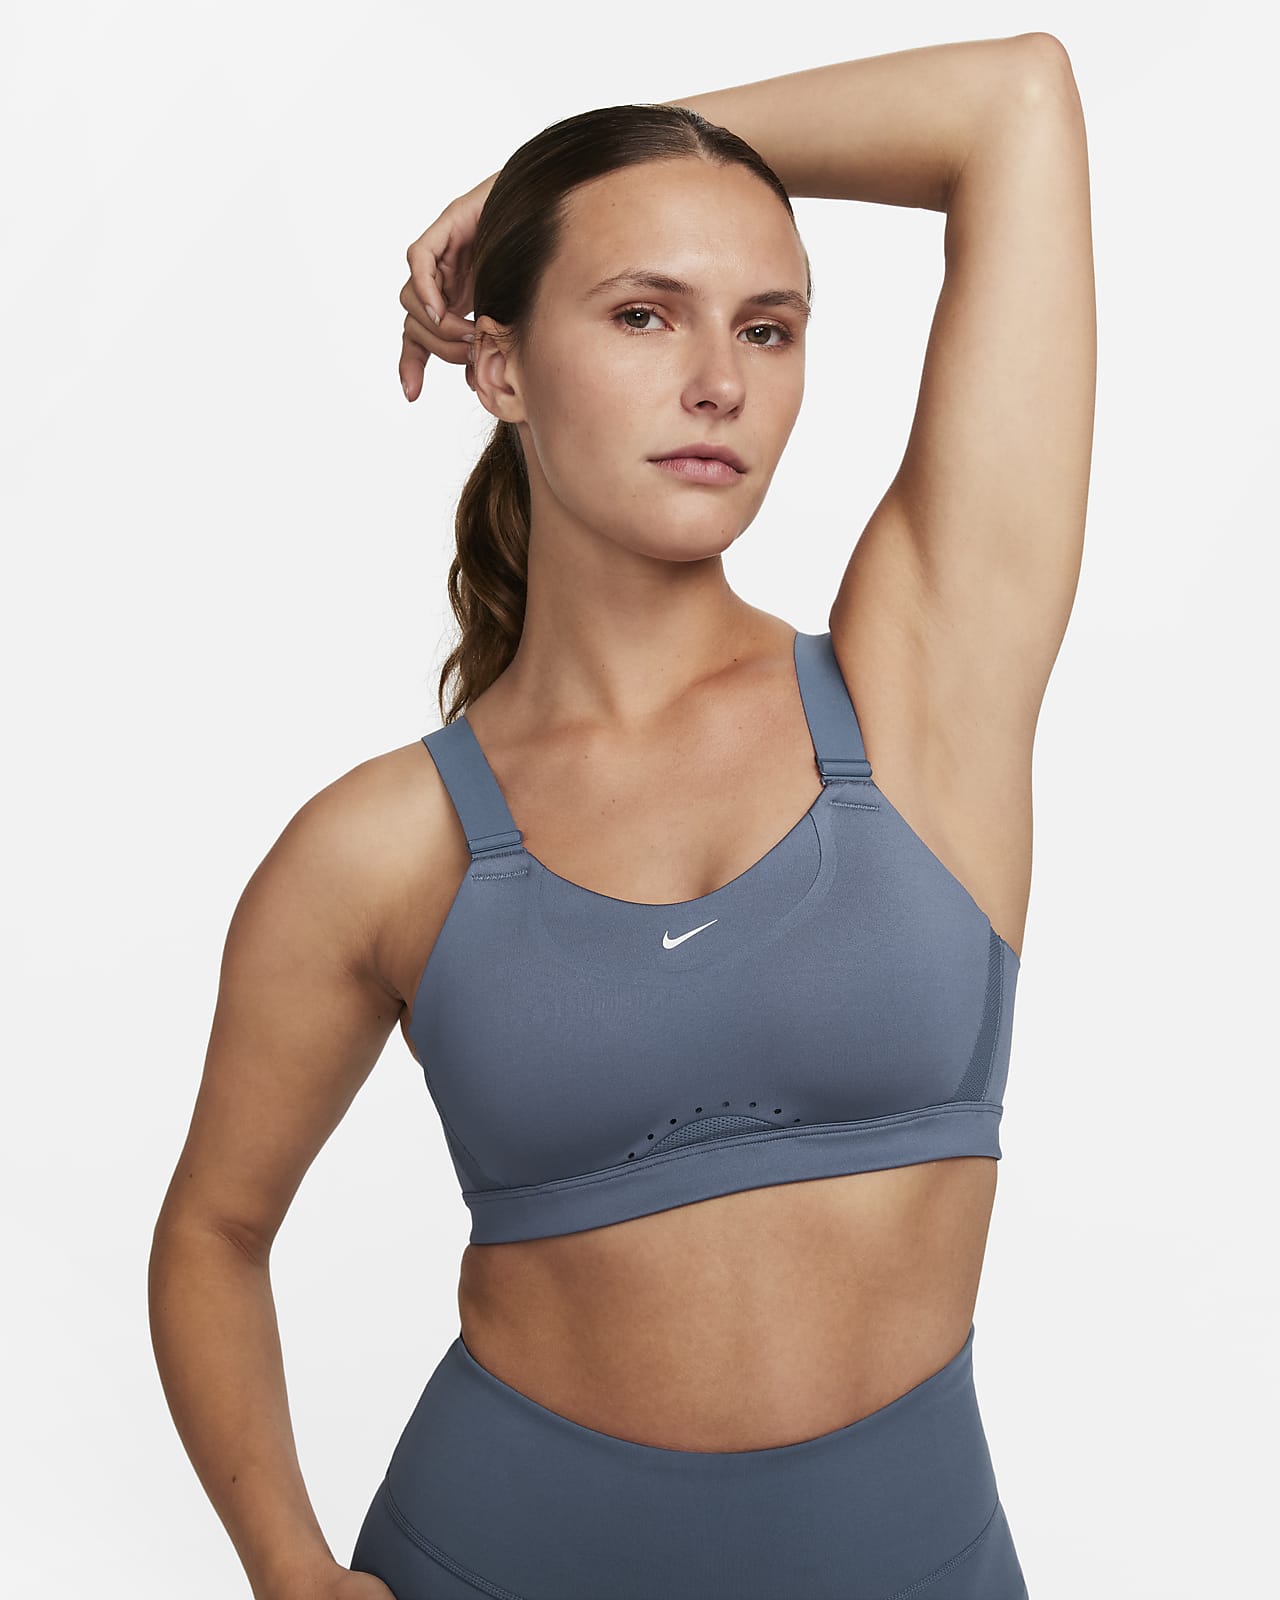 Women's Training & Gym Accessories & Equipment. Nike CA